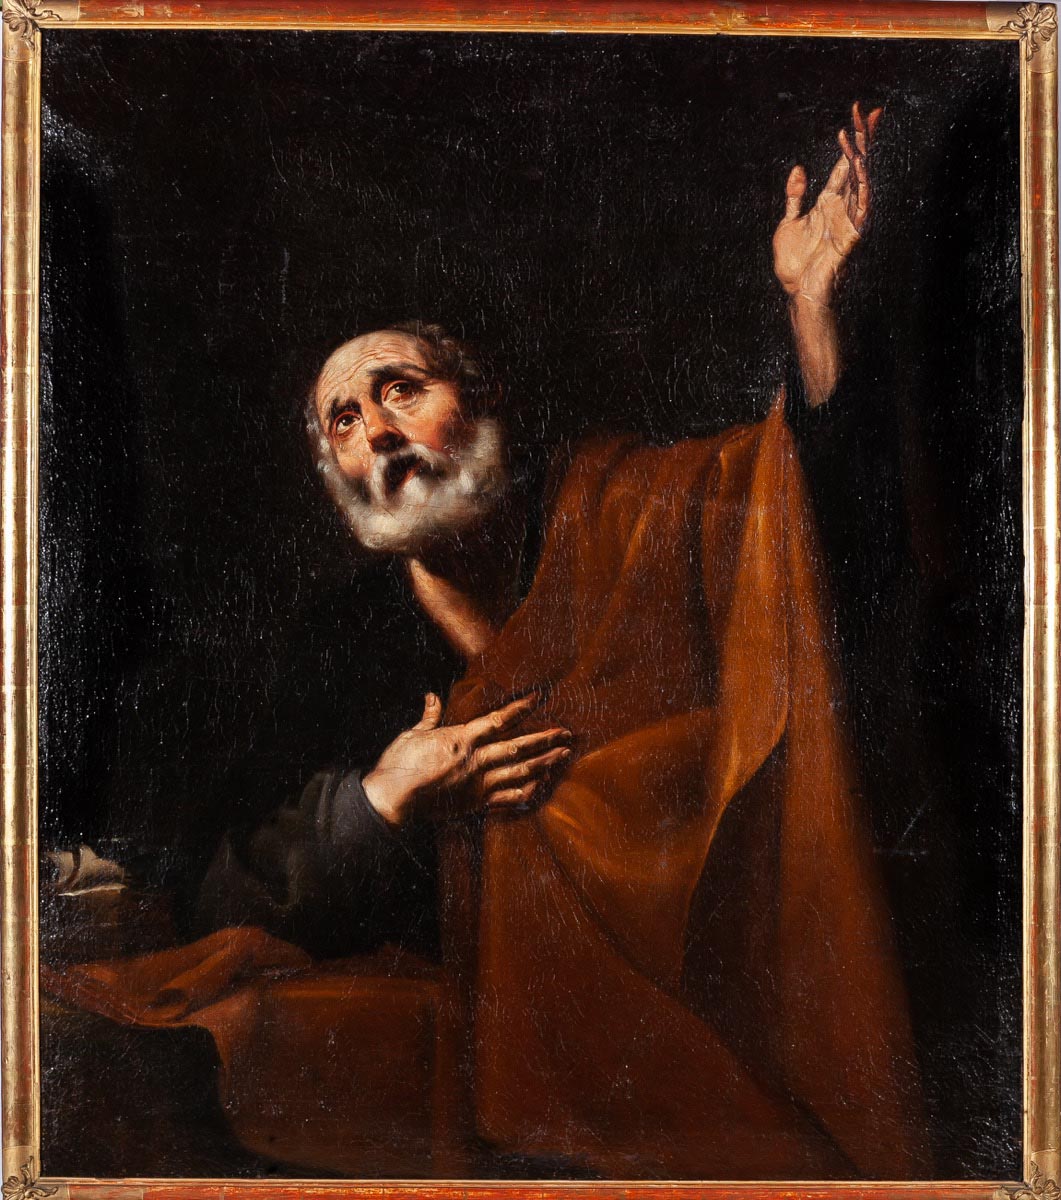 Copia de Jose de Ribera, siglo XVII, Las lágrimas de San Pedro. Salida: 7.000 euros. No vendido